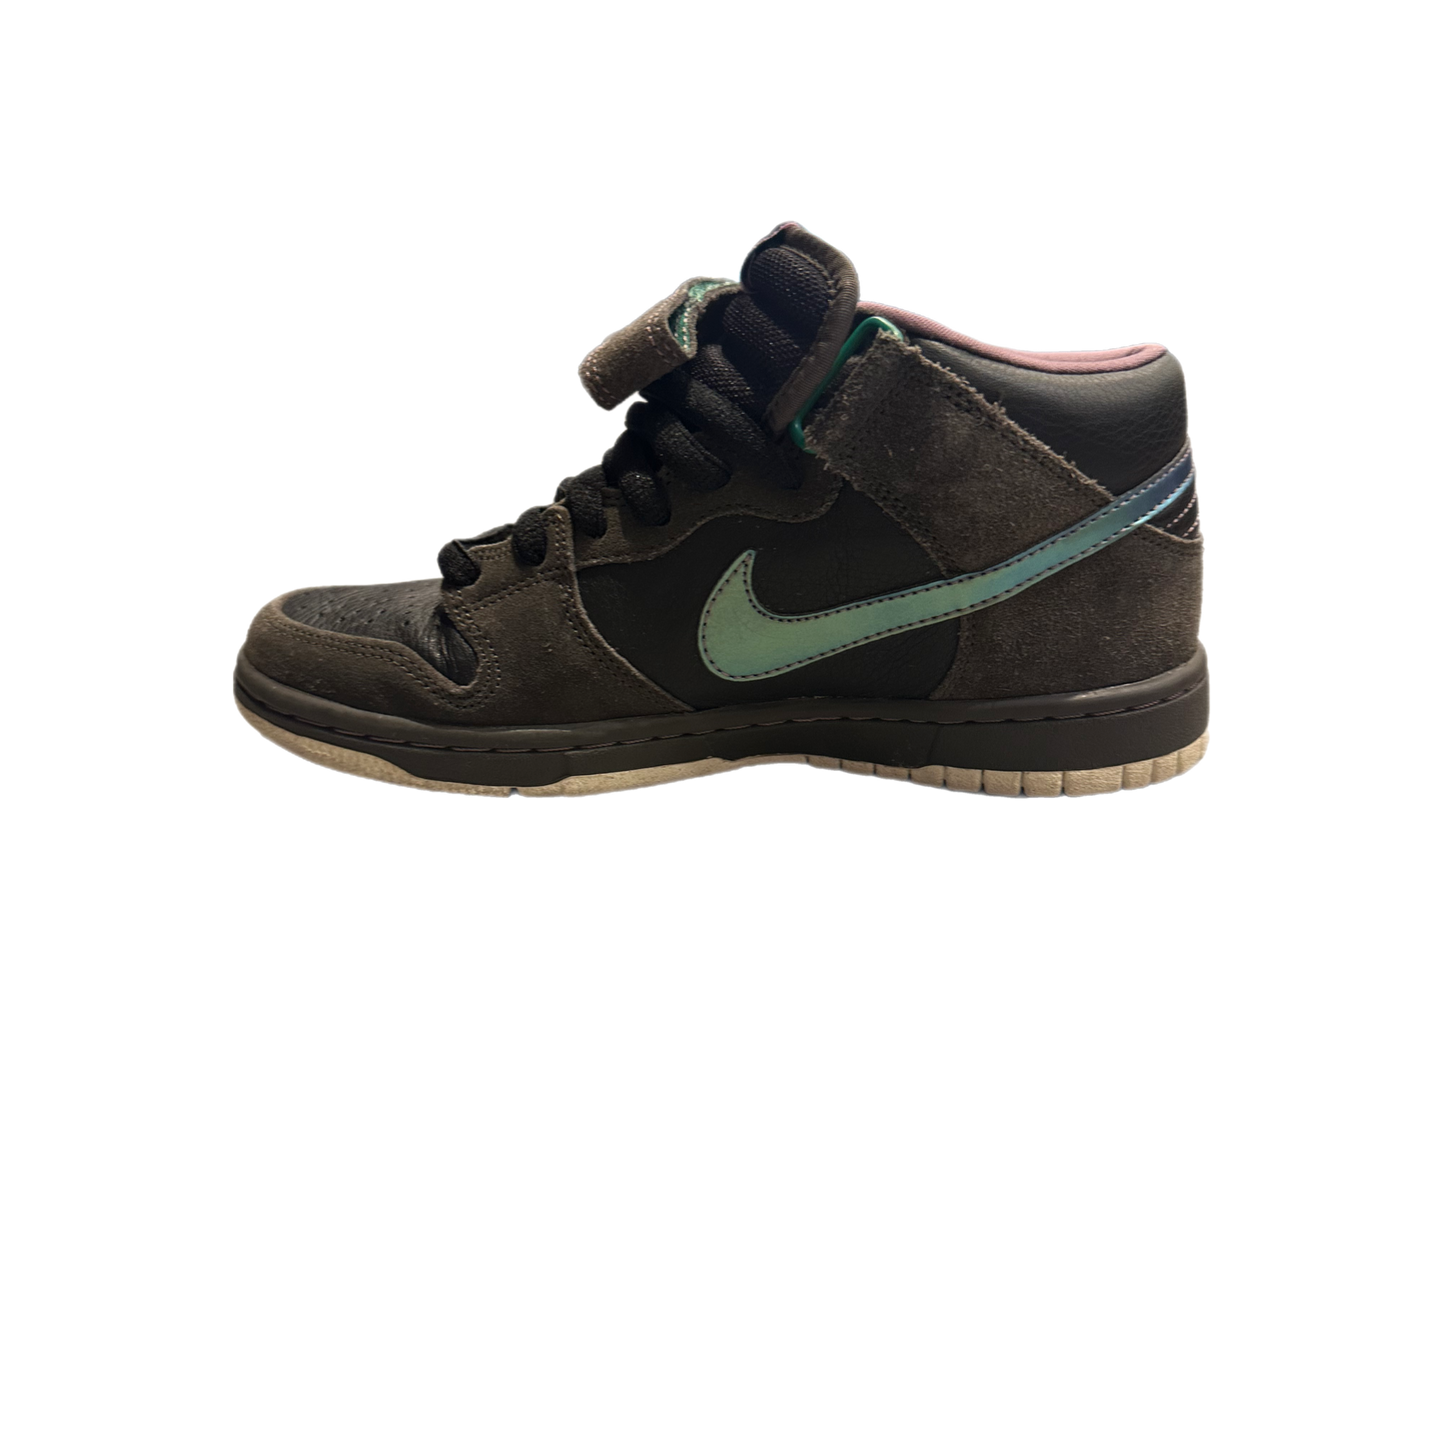 Nike - "Sb Dunk Mid Northern Lights" - Size 6.5